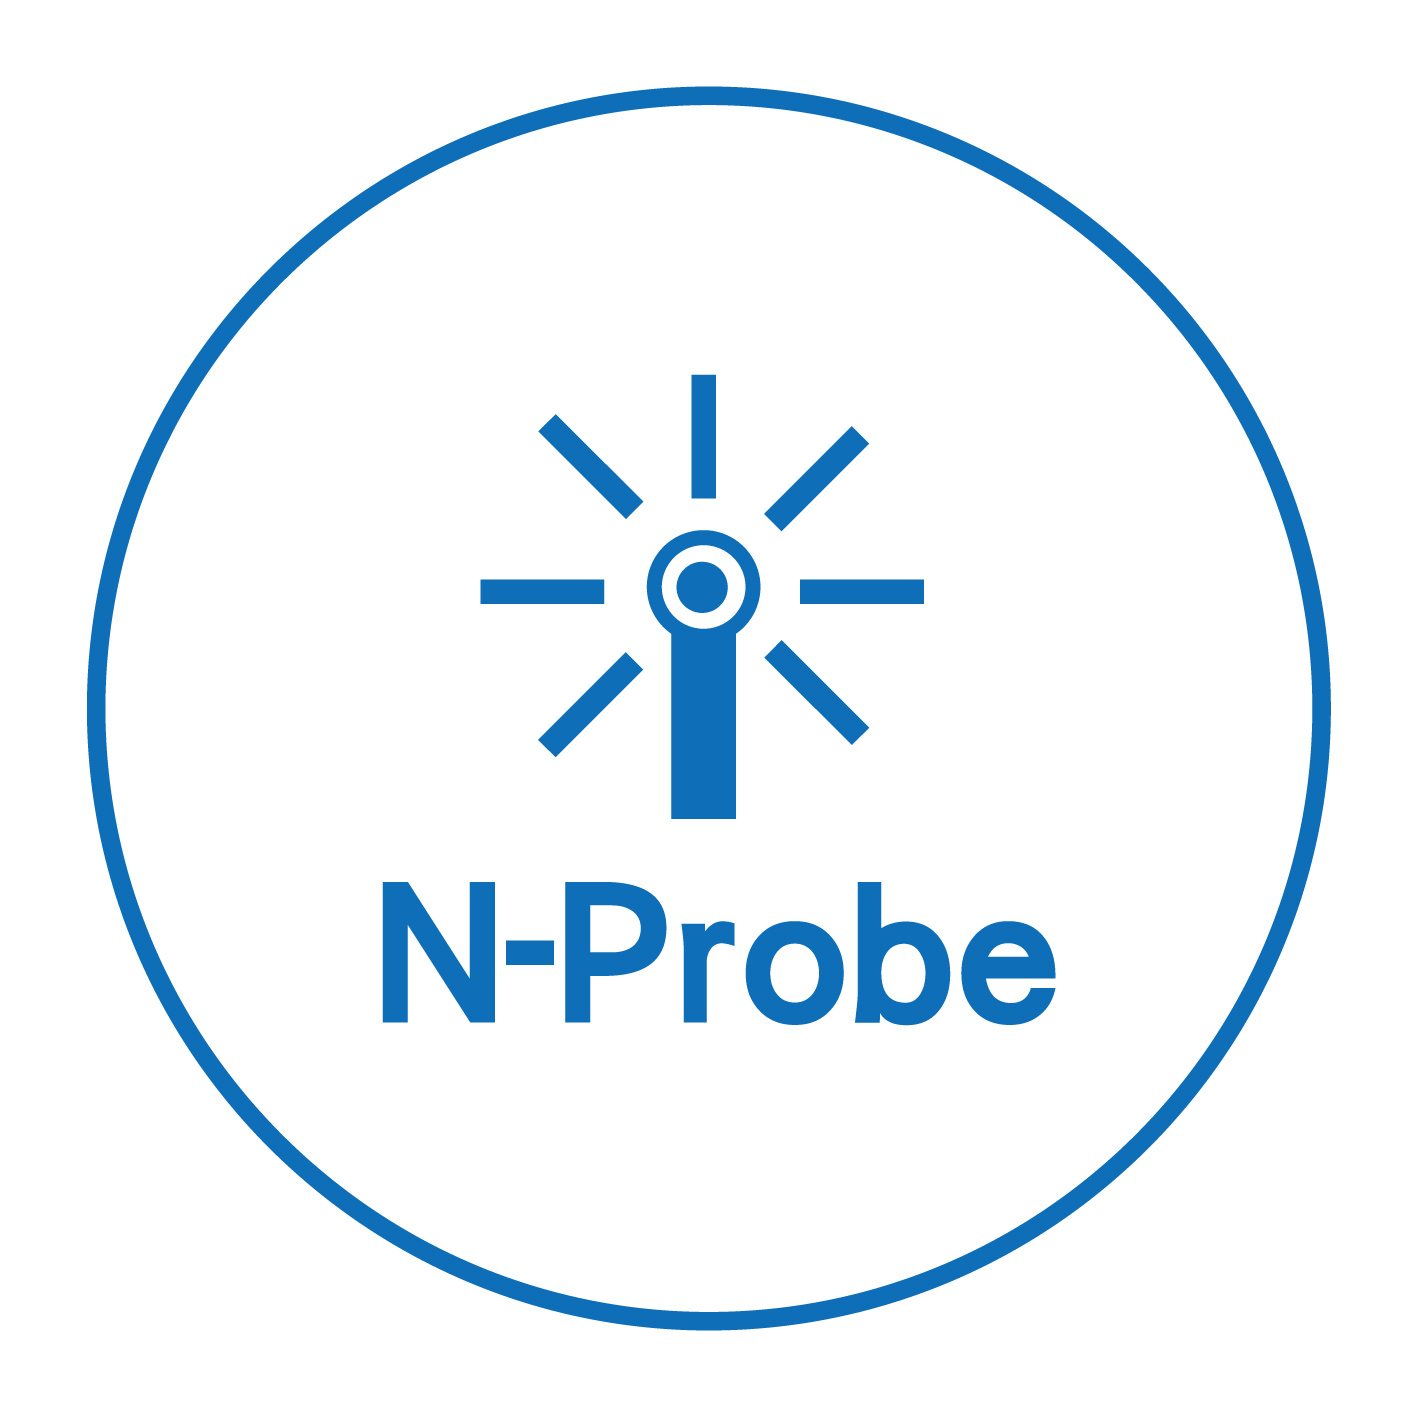 N-Probe